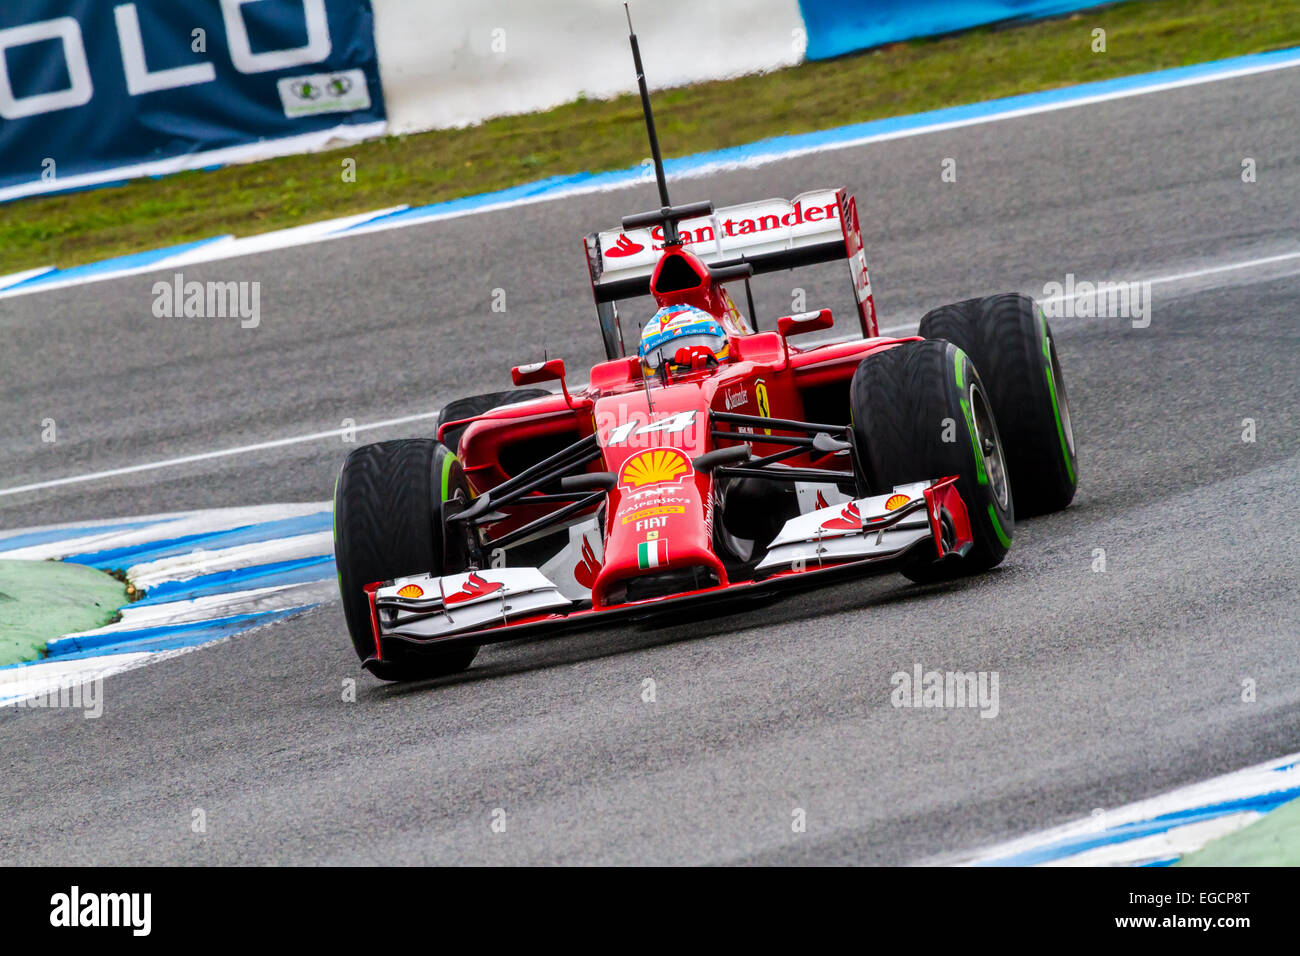 Fernando Alonso of Scuderia Ferrari F1 races on training session Stock ...